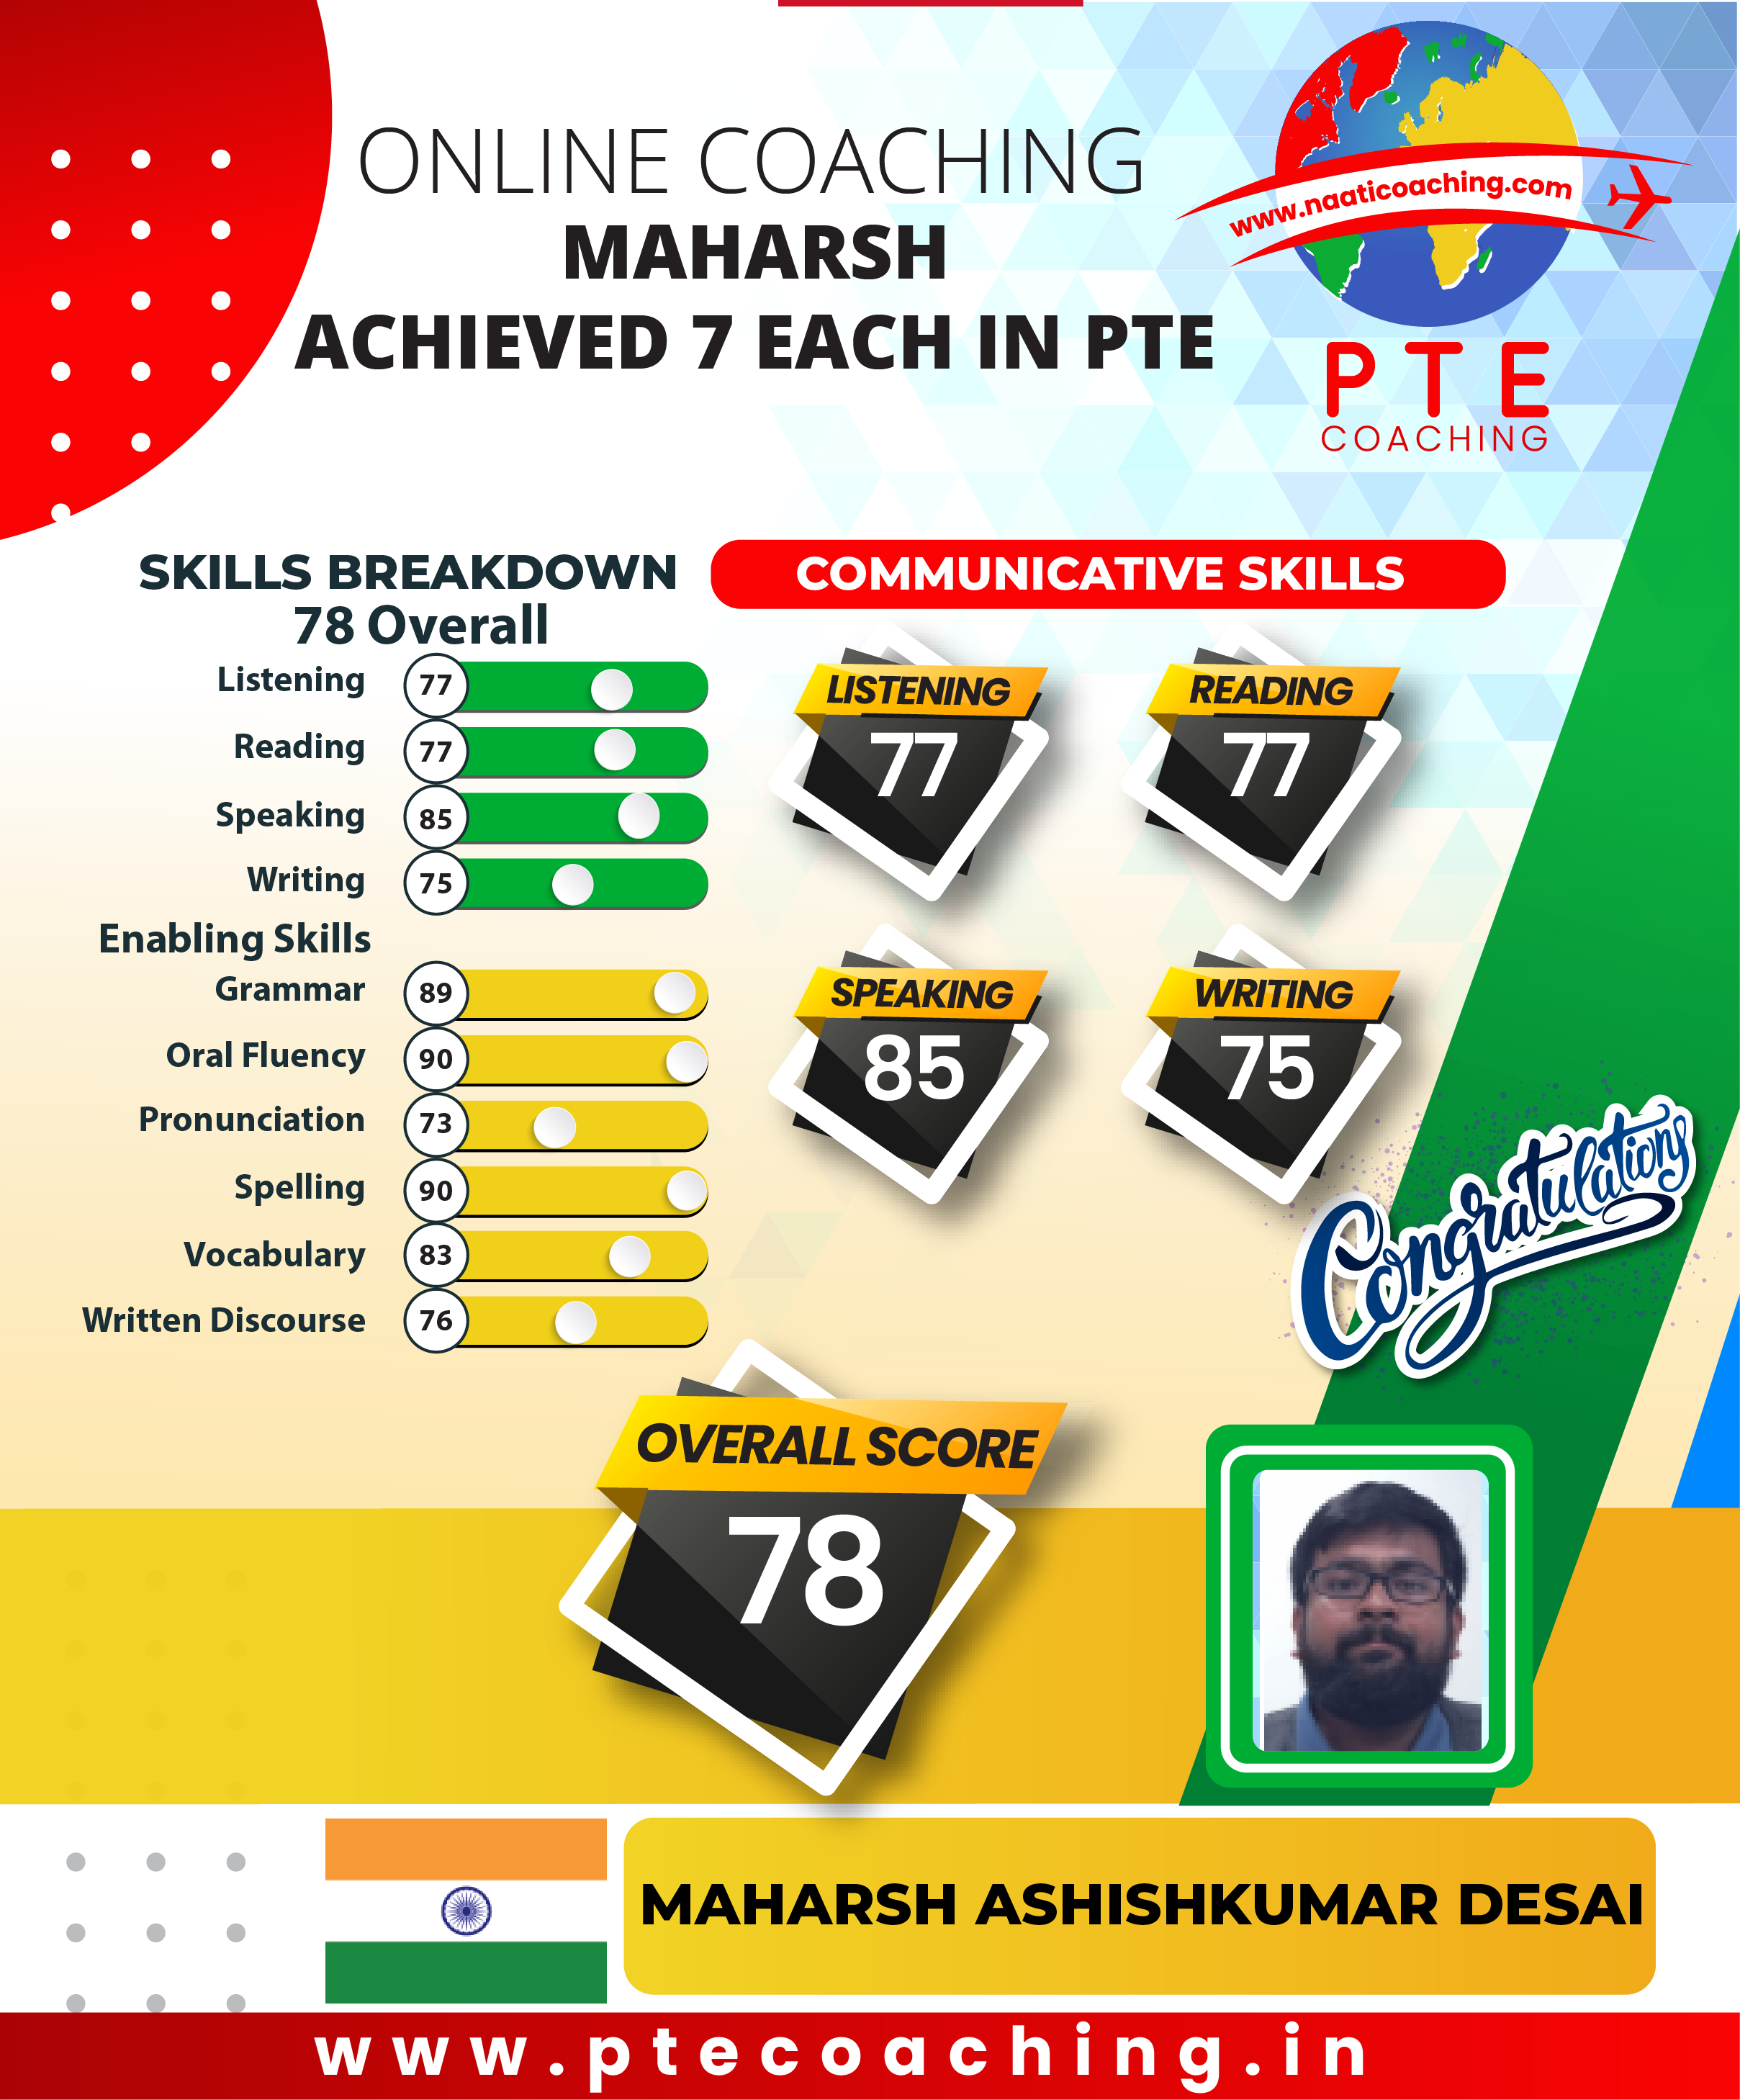 PTE Coaching Scorecard - Maharsh achieved 7 each in PTE